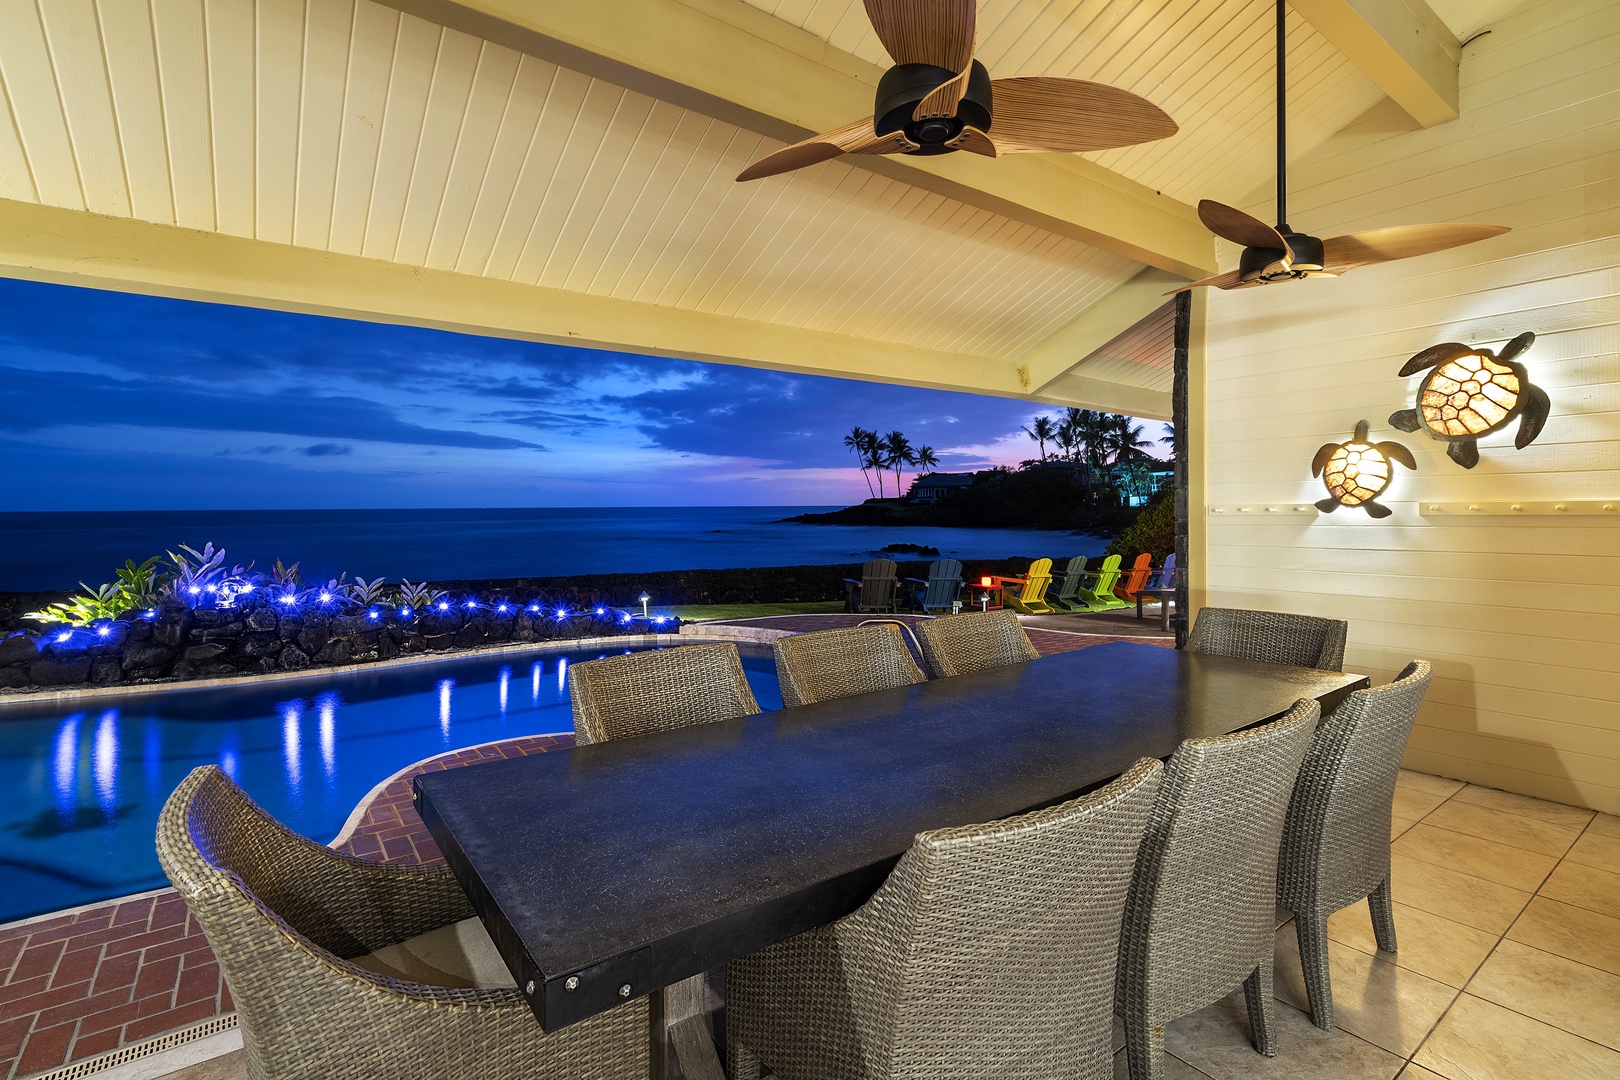 Kailua Kona Vacation Rentals, Hale Pua - Lanai Sunset at the outdoor dining area